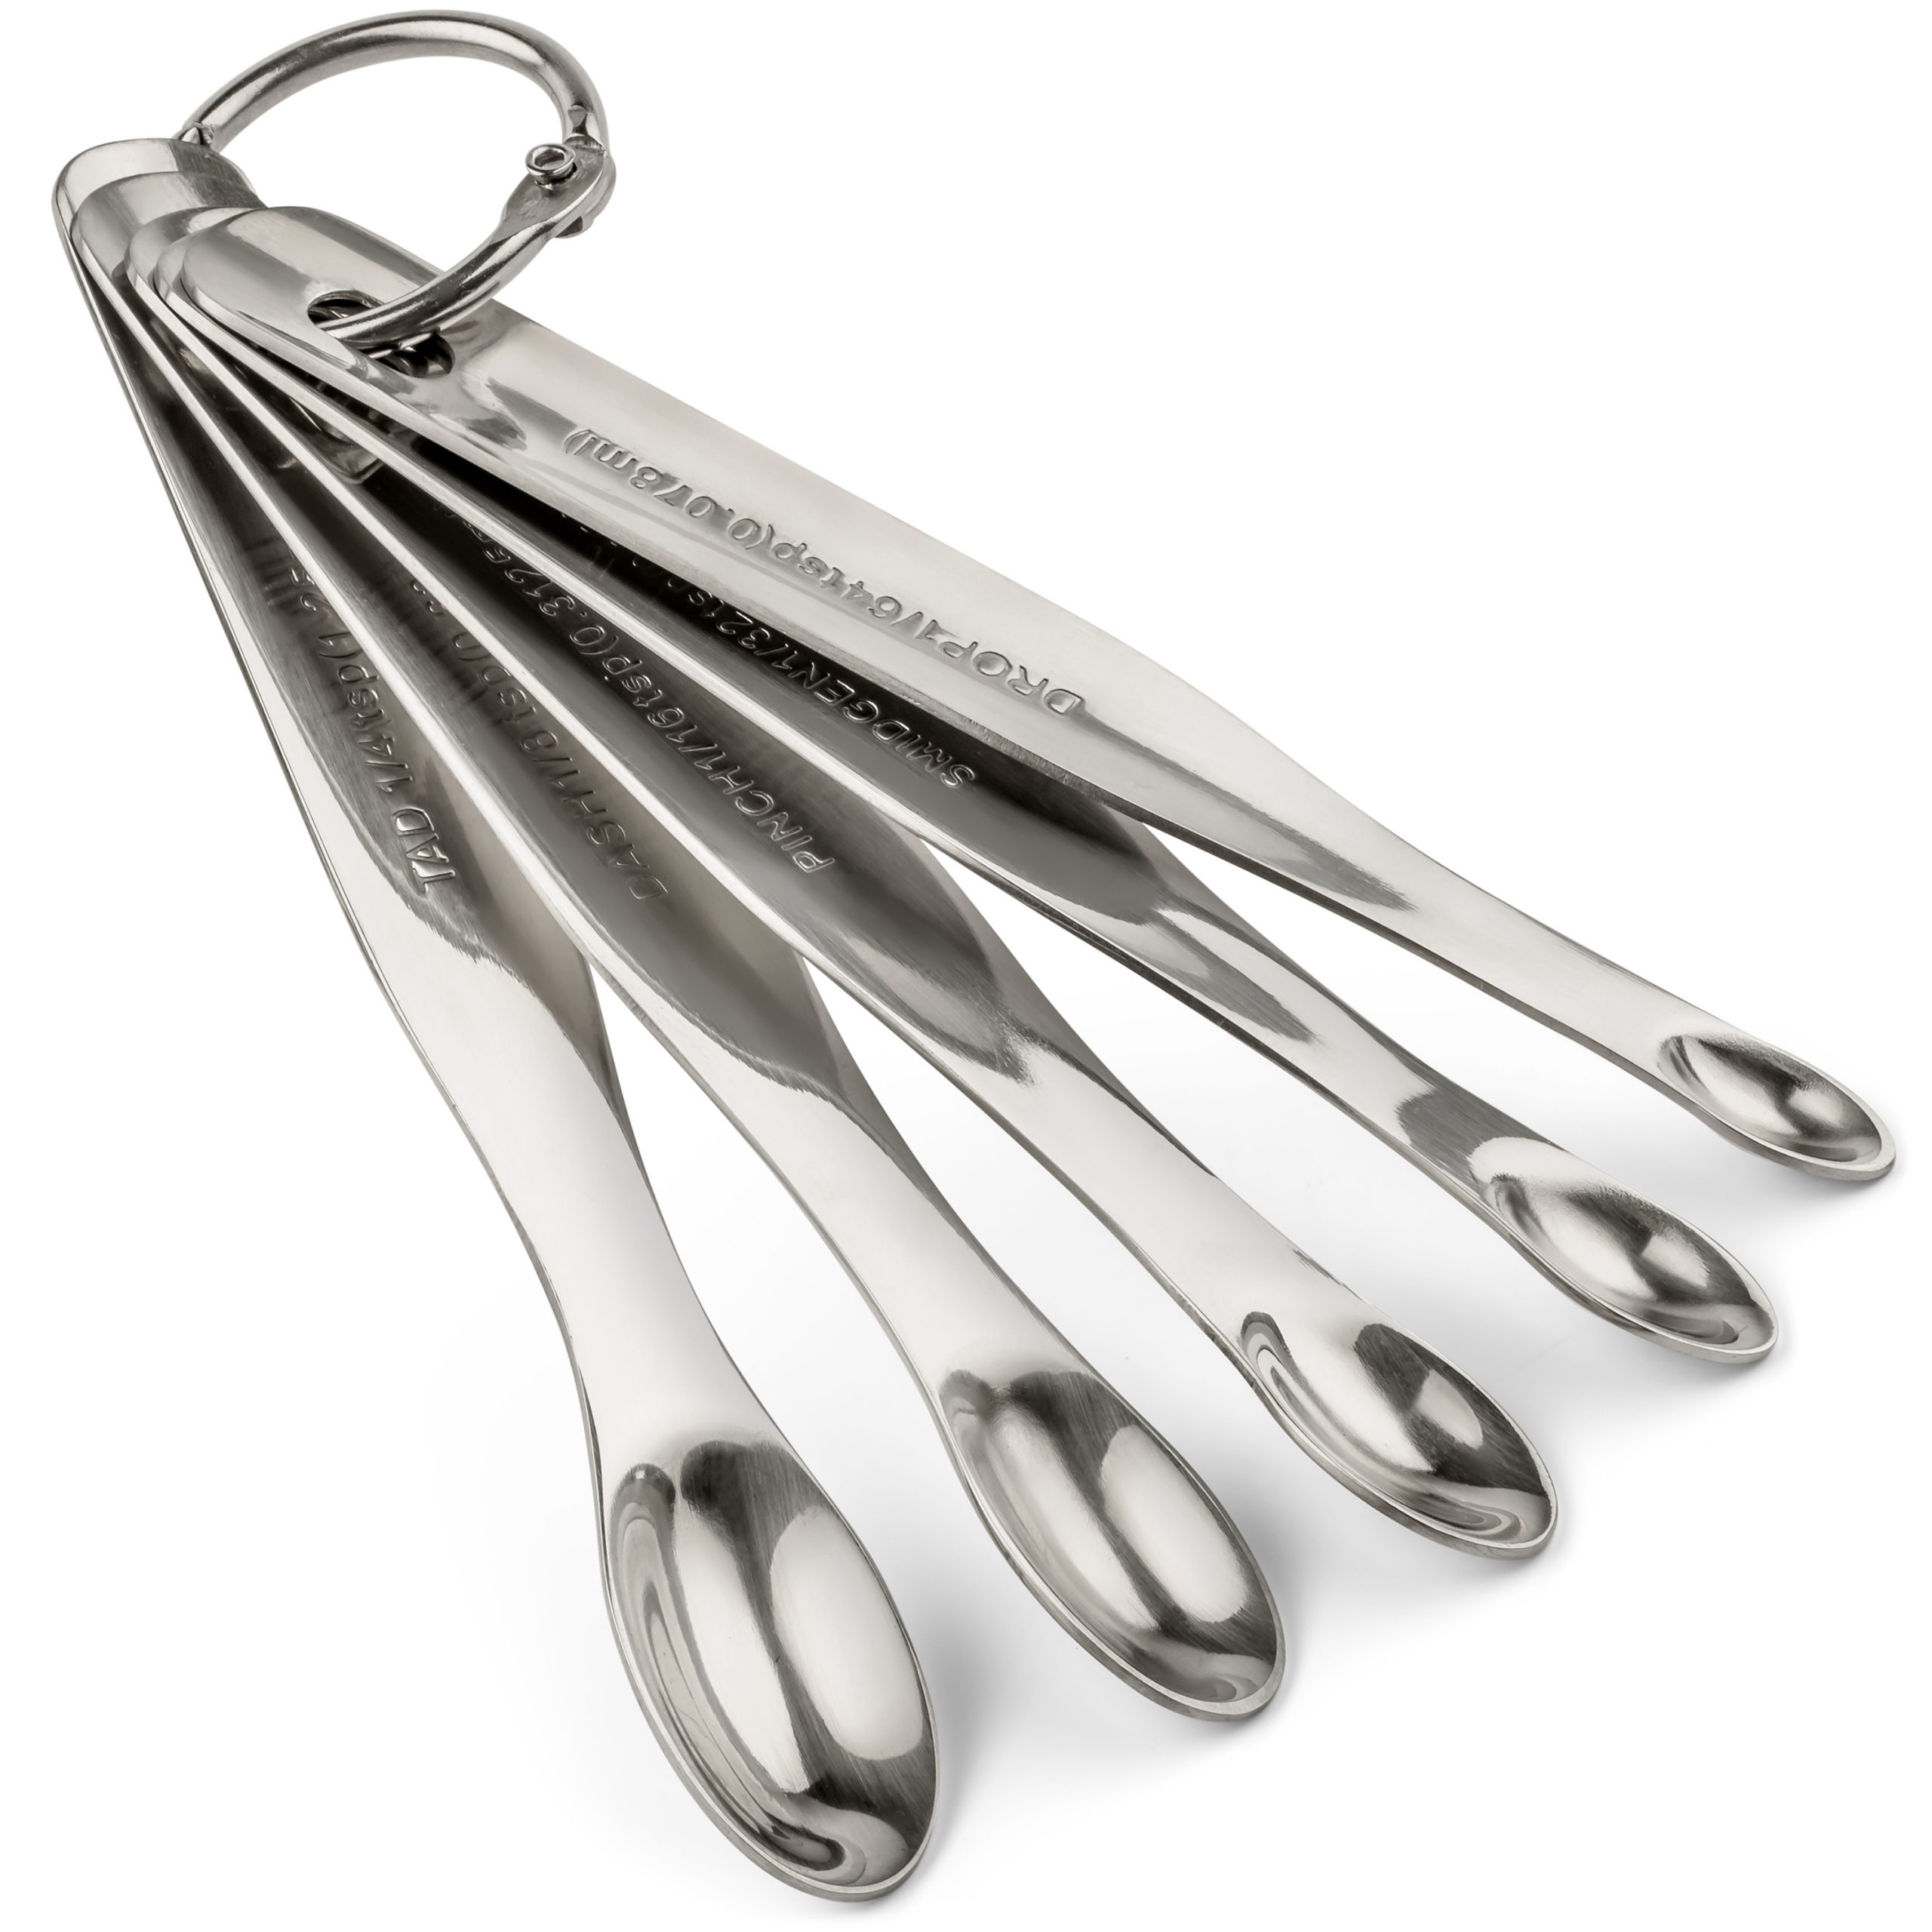 Morgenhaan (13-Piece) Stainless Steel Measuring Cups & Spoons